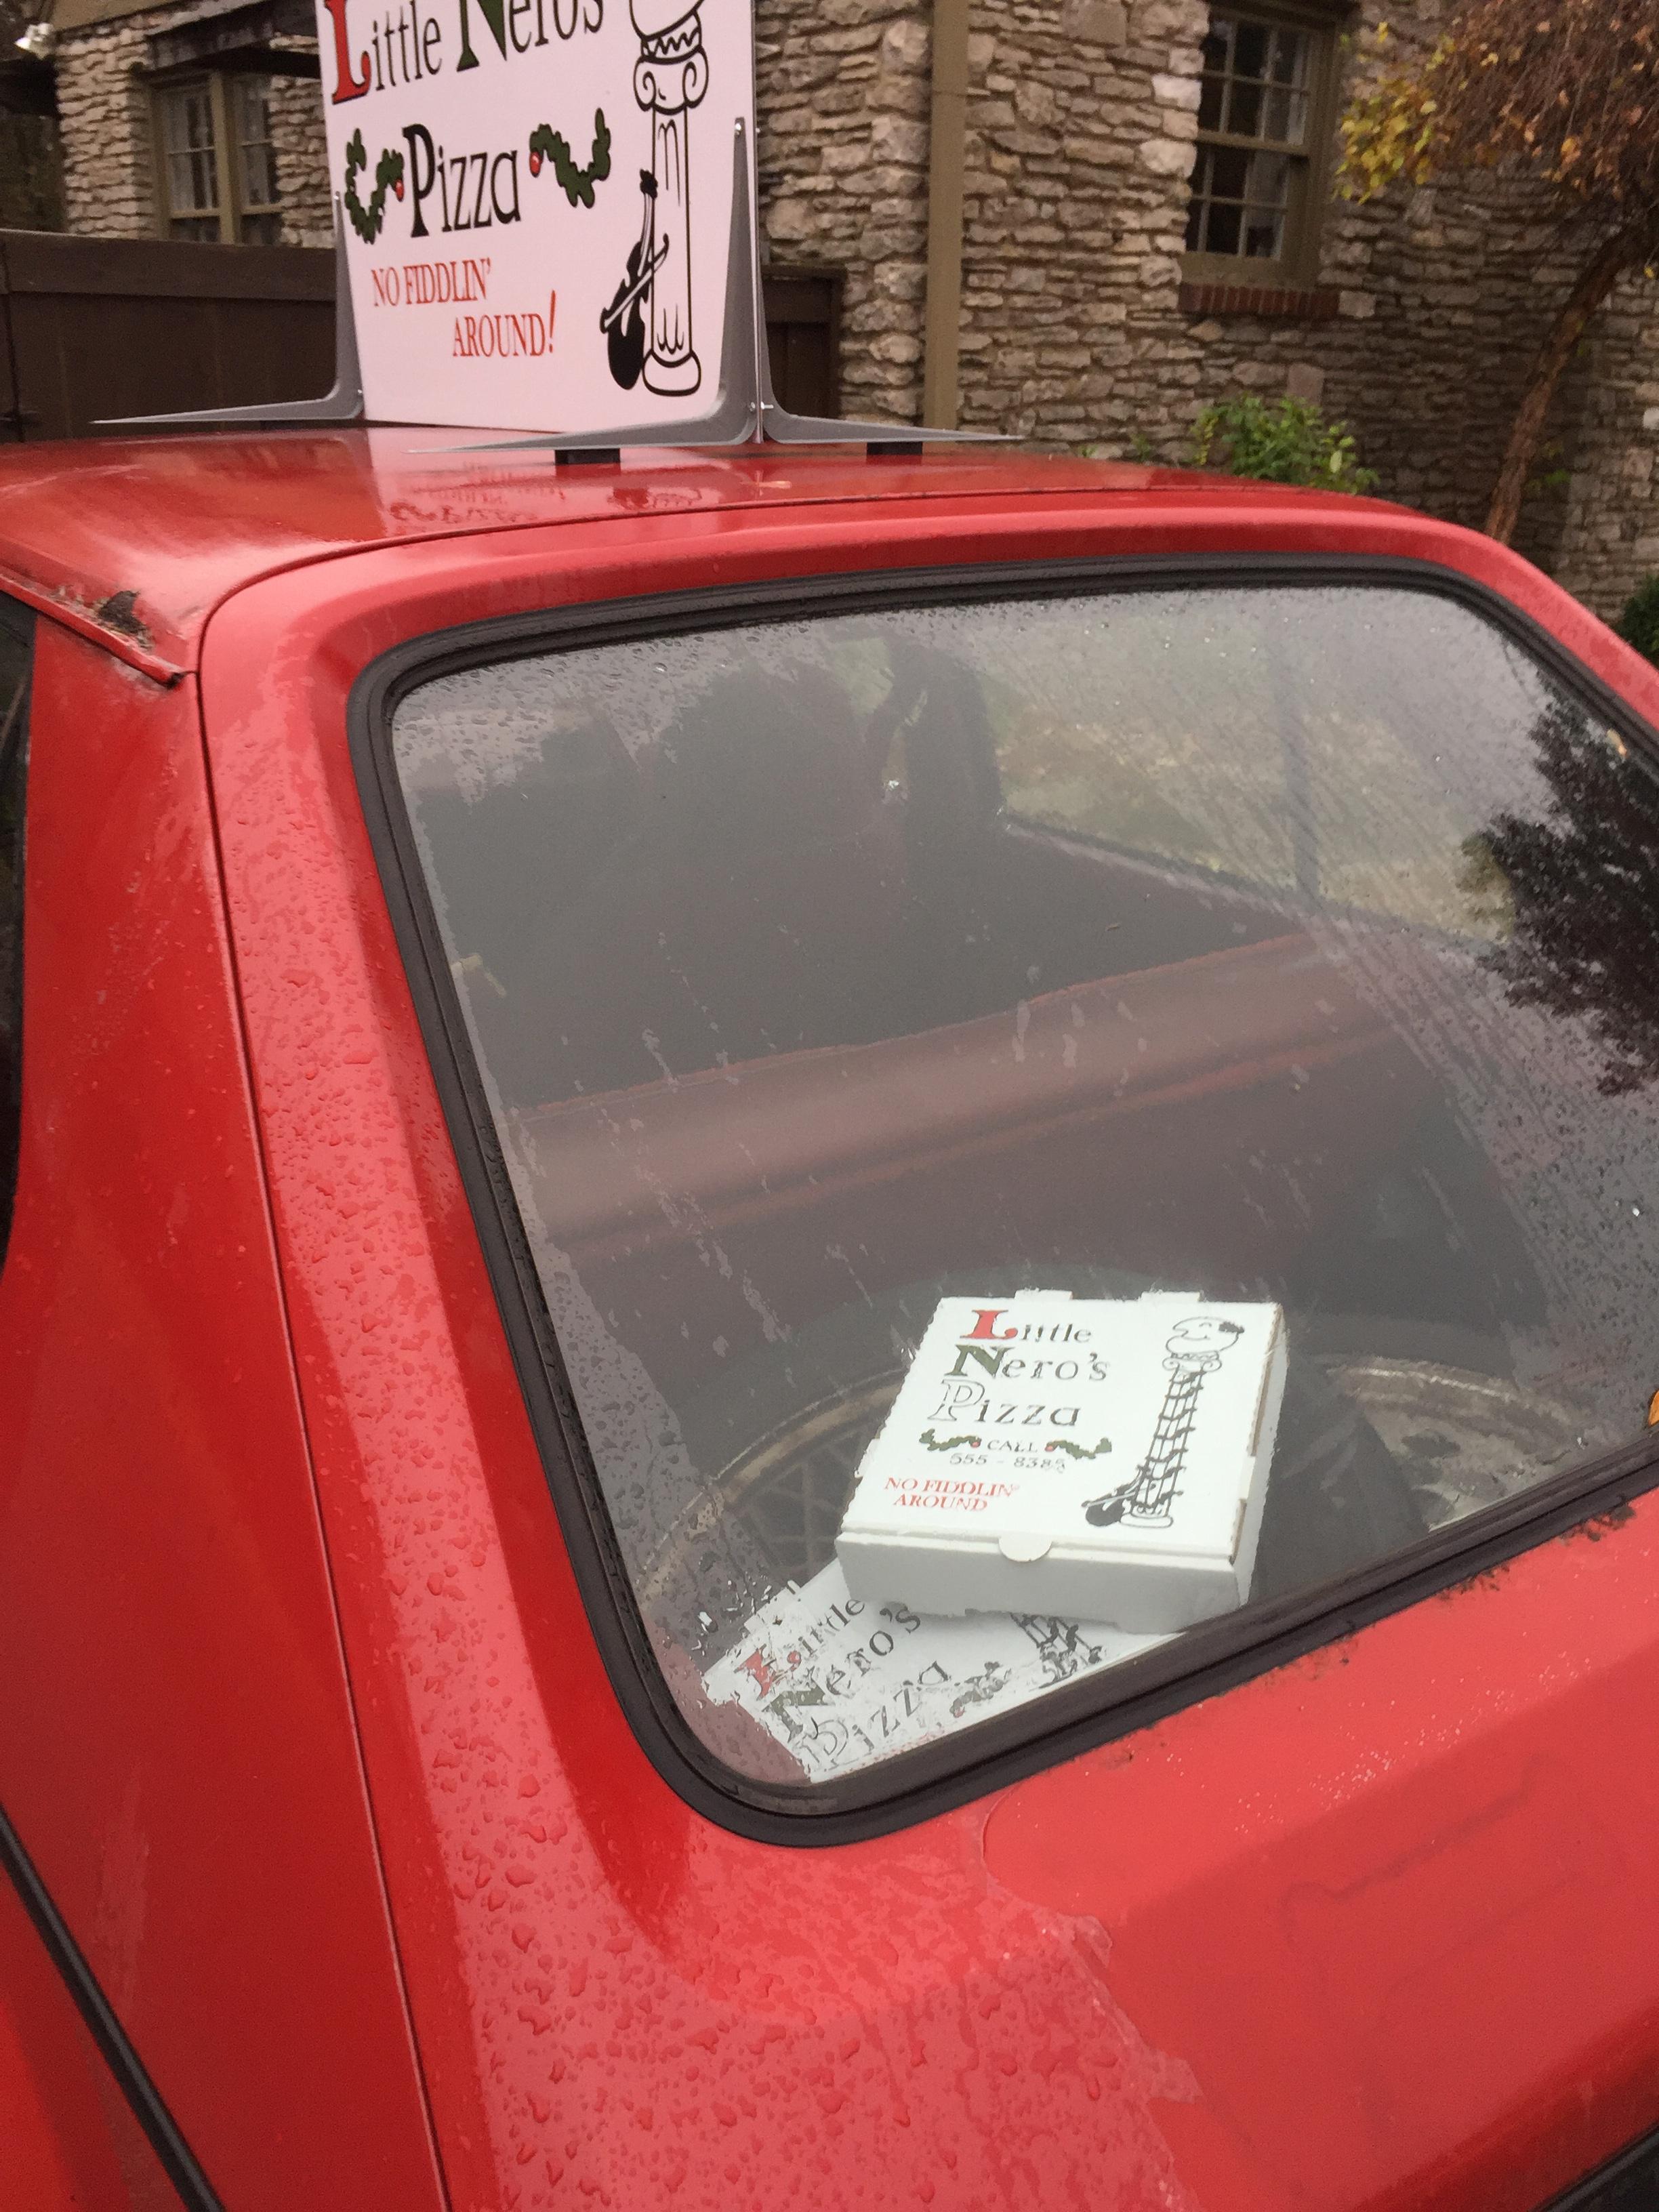 Home Alone Fans Recreate The Little Nero's Pizza Car